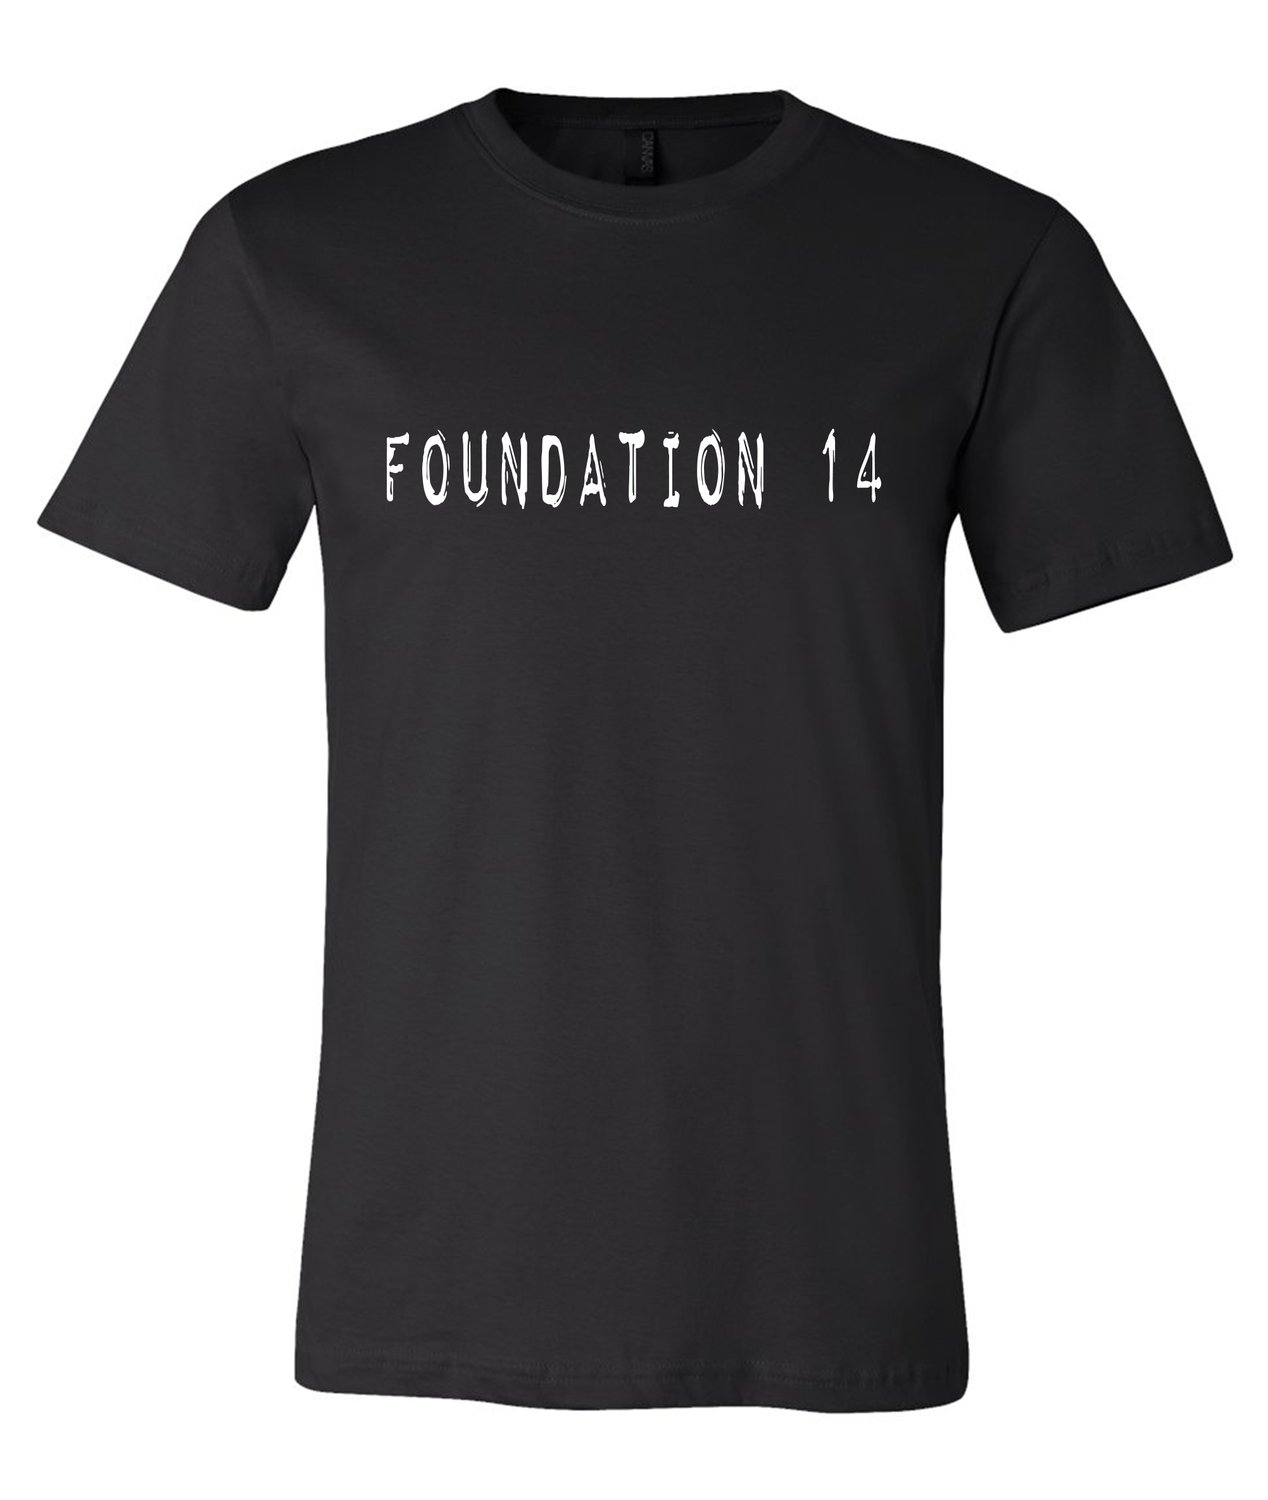 Foundation 14